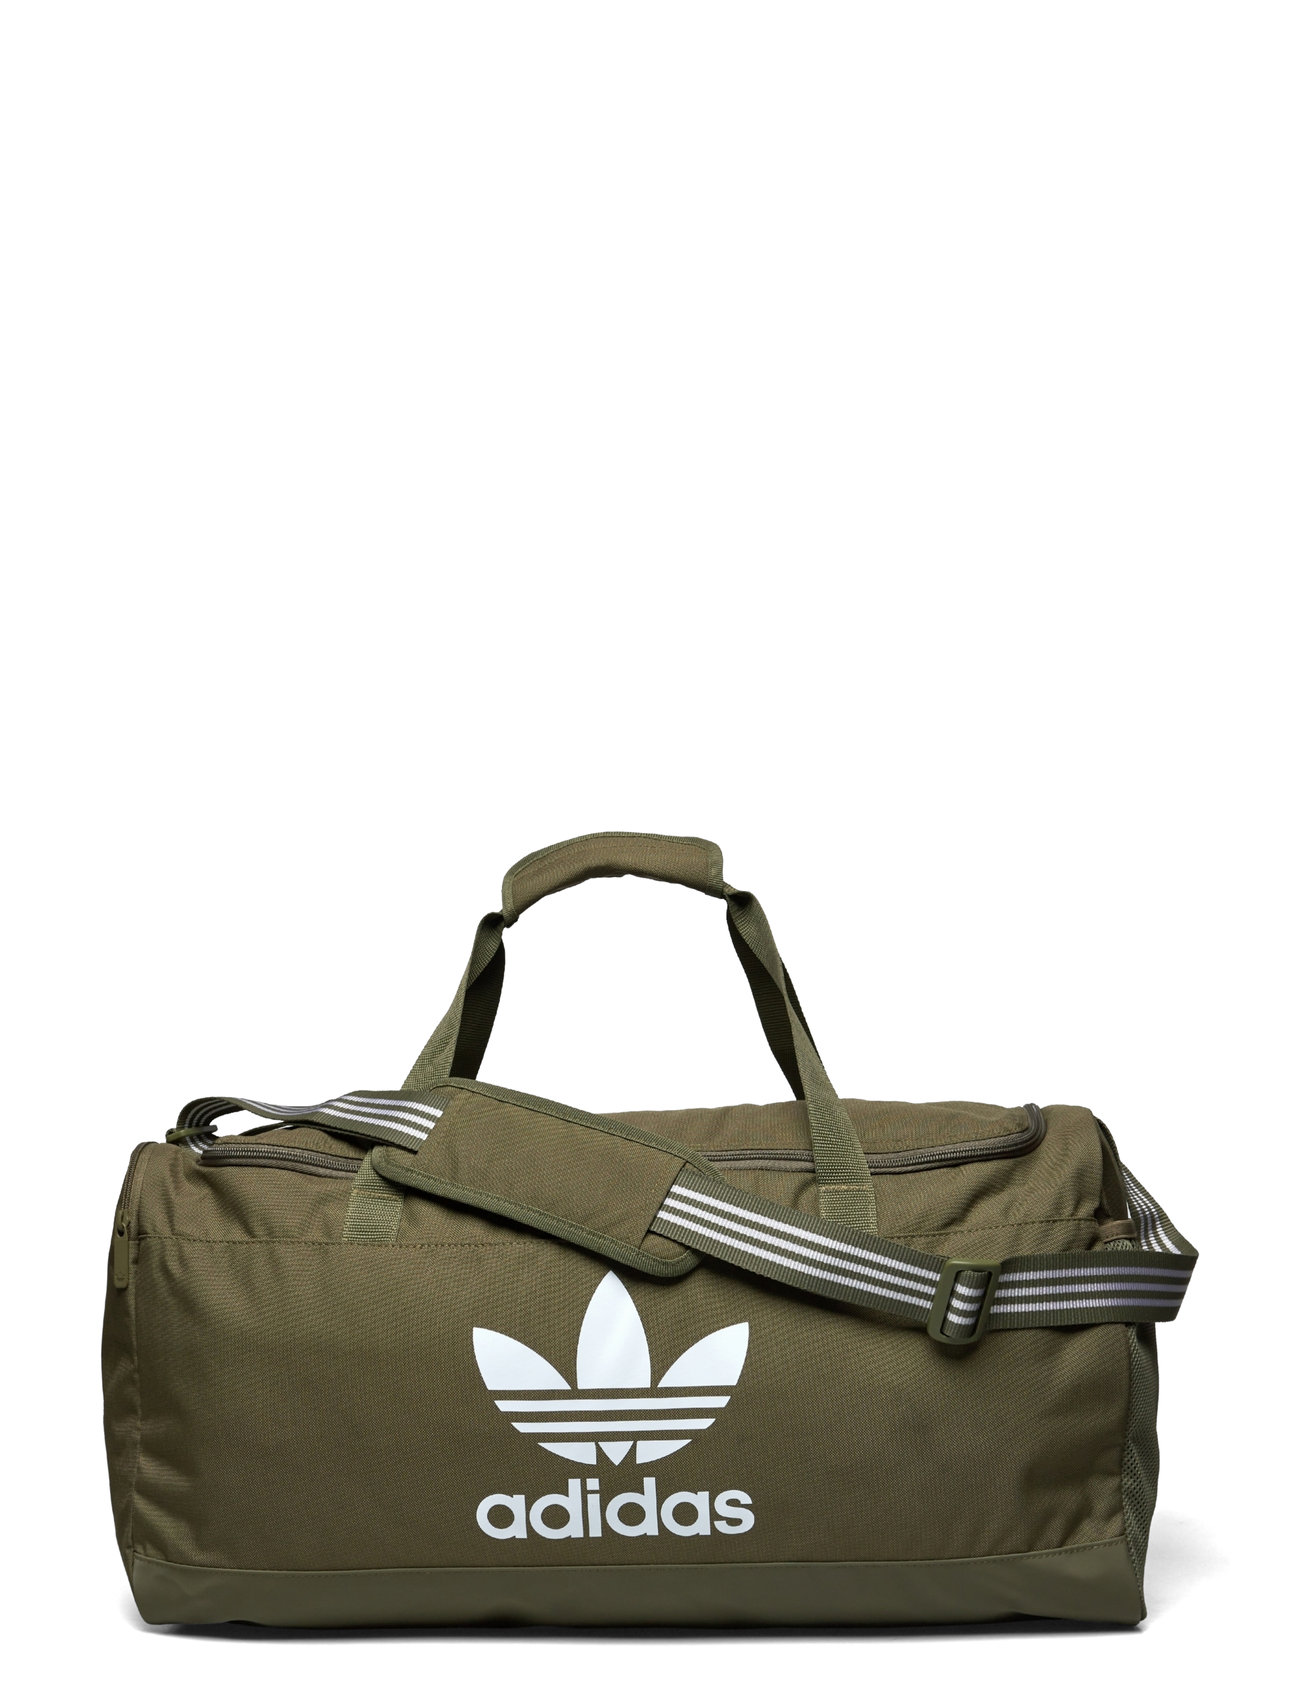 adidas Originals Duffle Bag - Weekend Bags